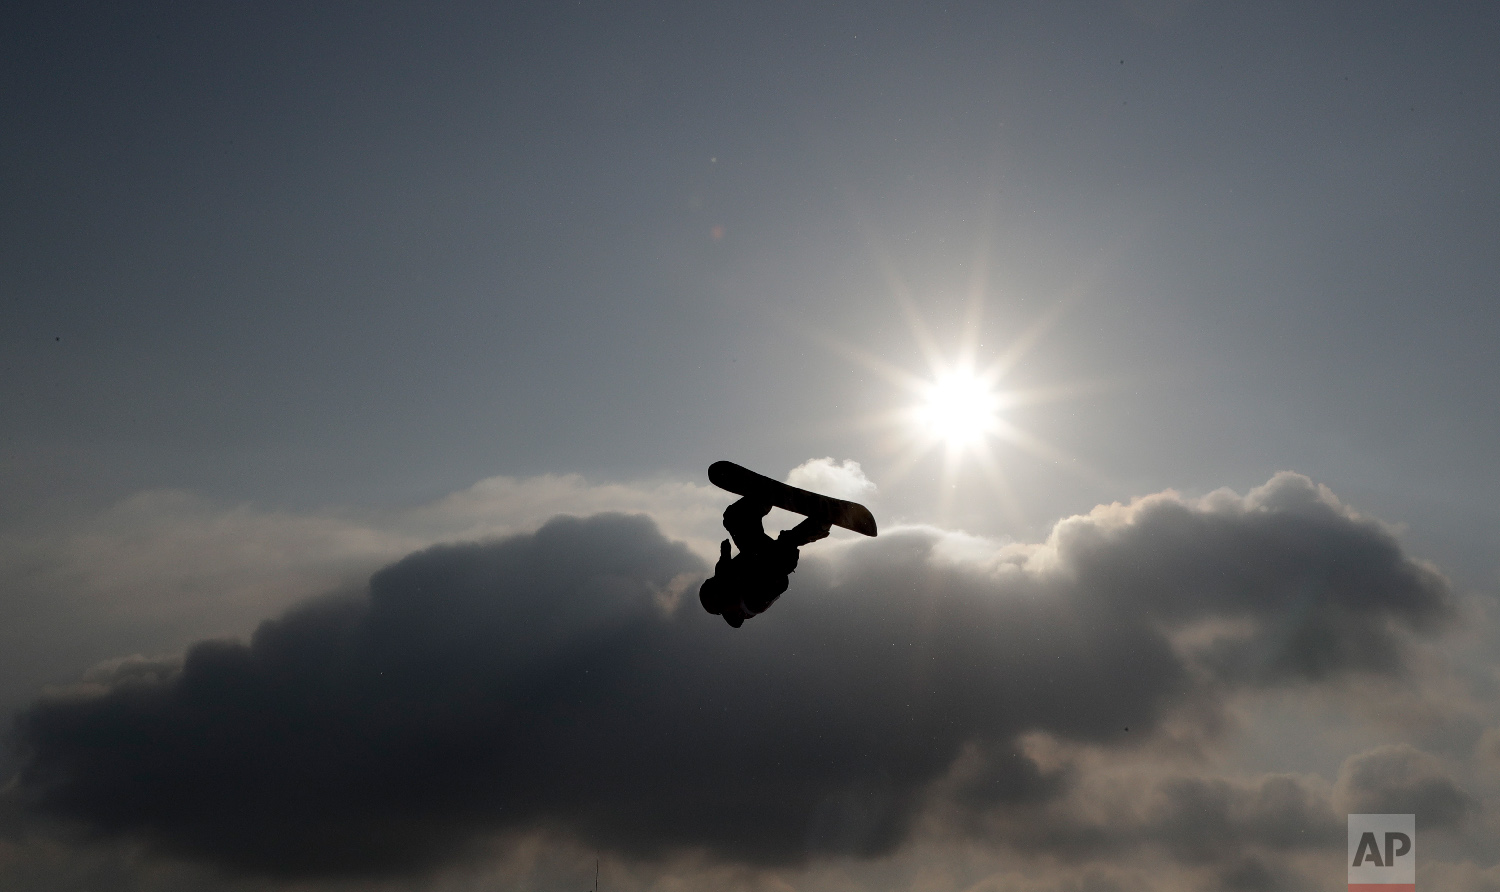  Miyabi Onitsuka, of Japan, jumps warm ups for during the women's Big Air snowboard final at the 2018 Winter Olympics in Pyeongchang, South Korea, Thursday, Feb. 22, 2018. (AP Photo/Matthias Schrader) 